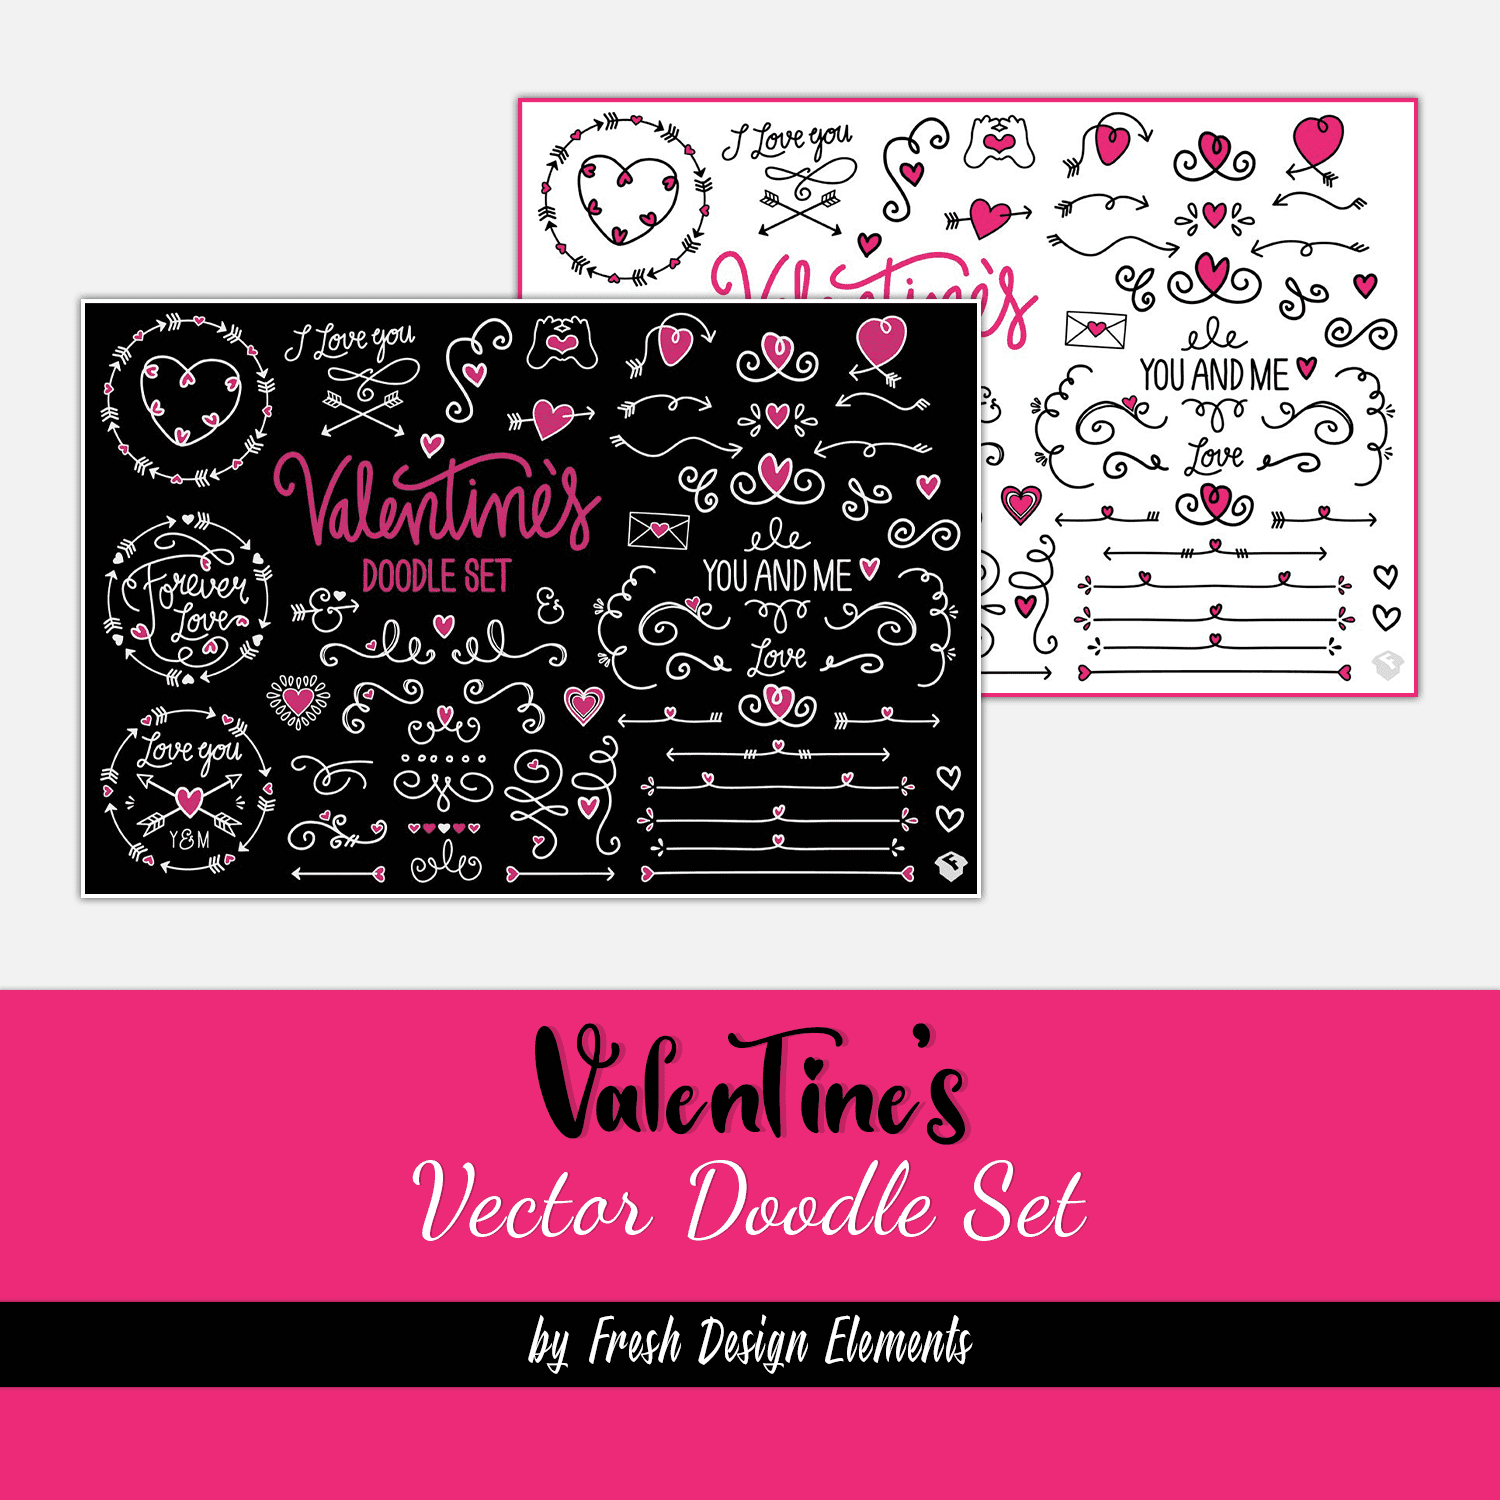 Valentine's Vector Doodle Set Cover.